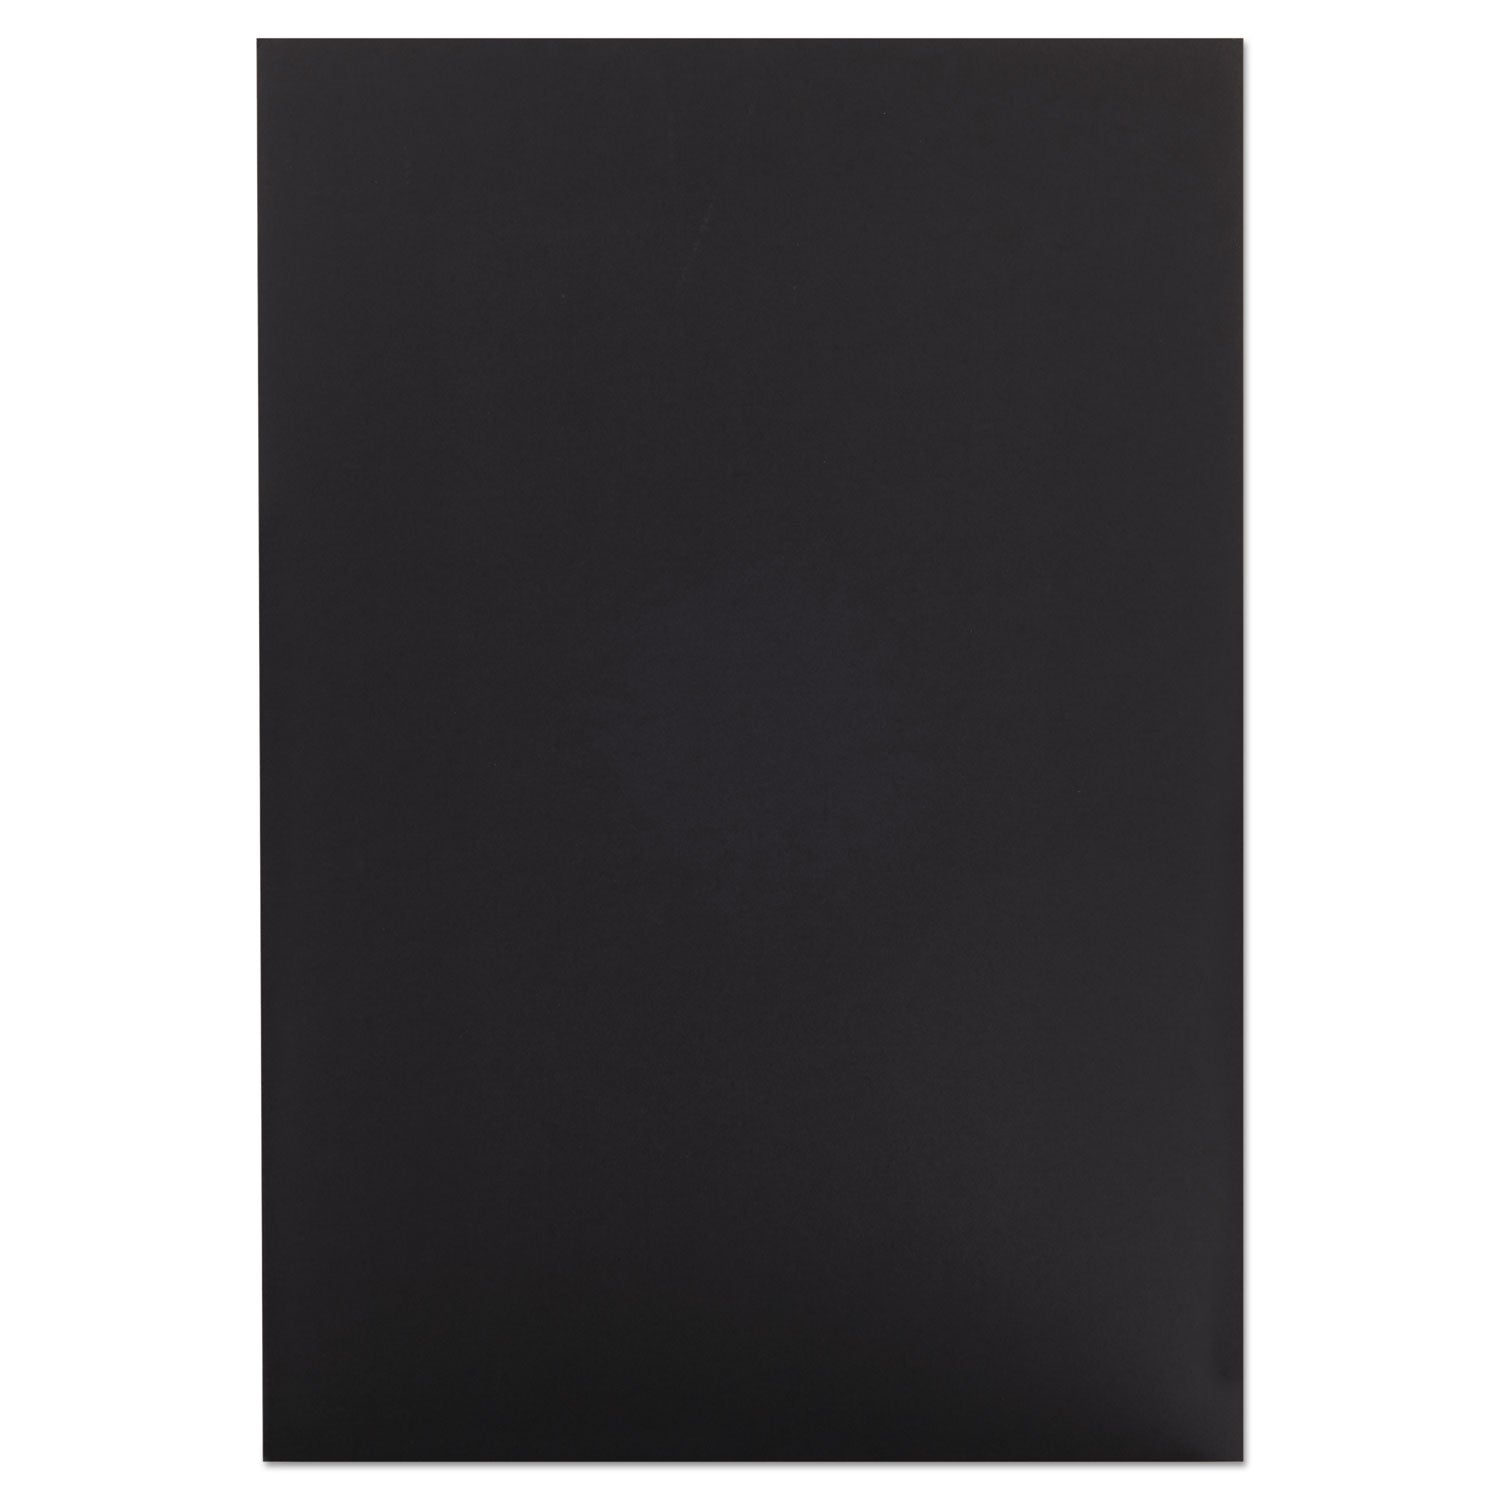 foam-board-cfc-free-polystyrene-20-x-30-black-surface-and-core-10-carton_acj07020109 - 1